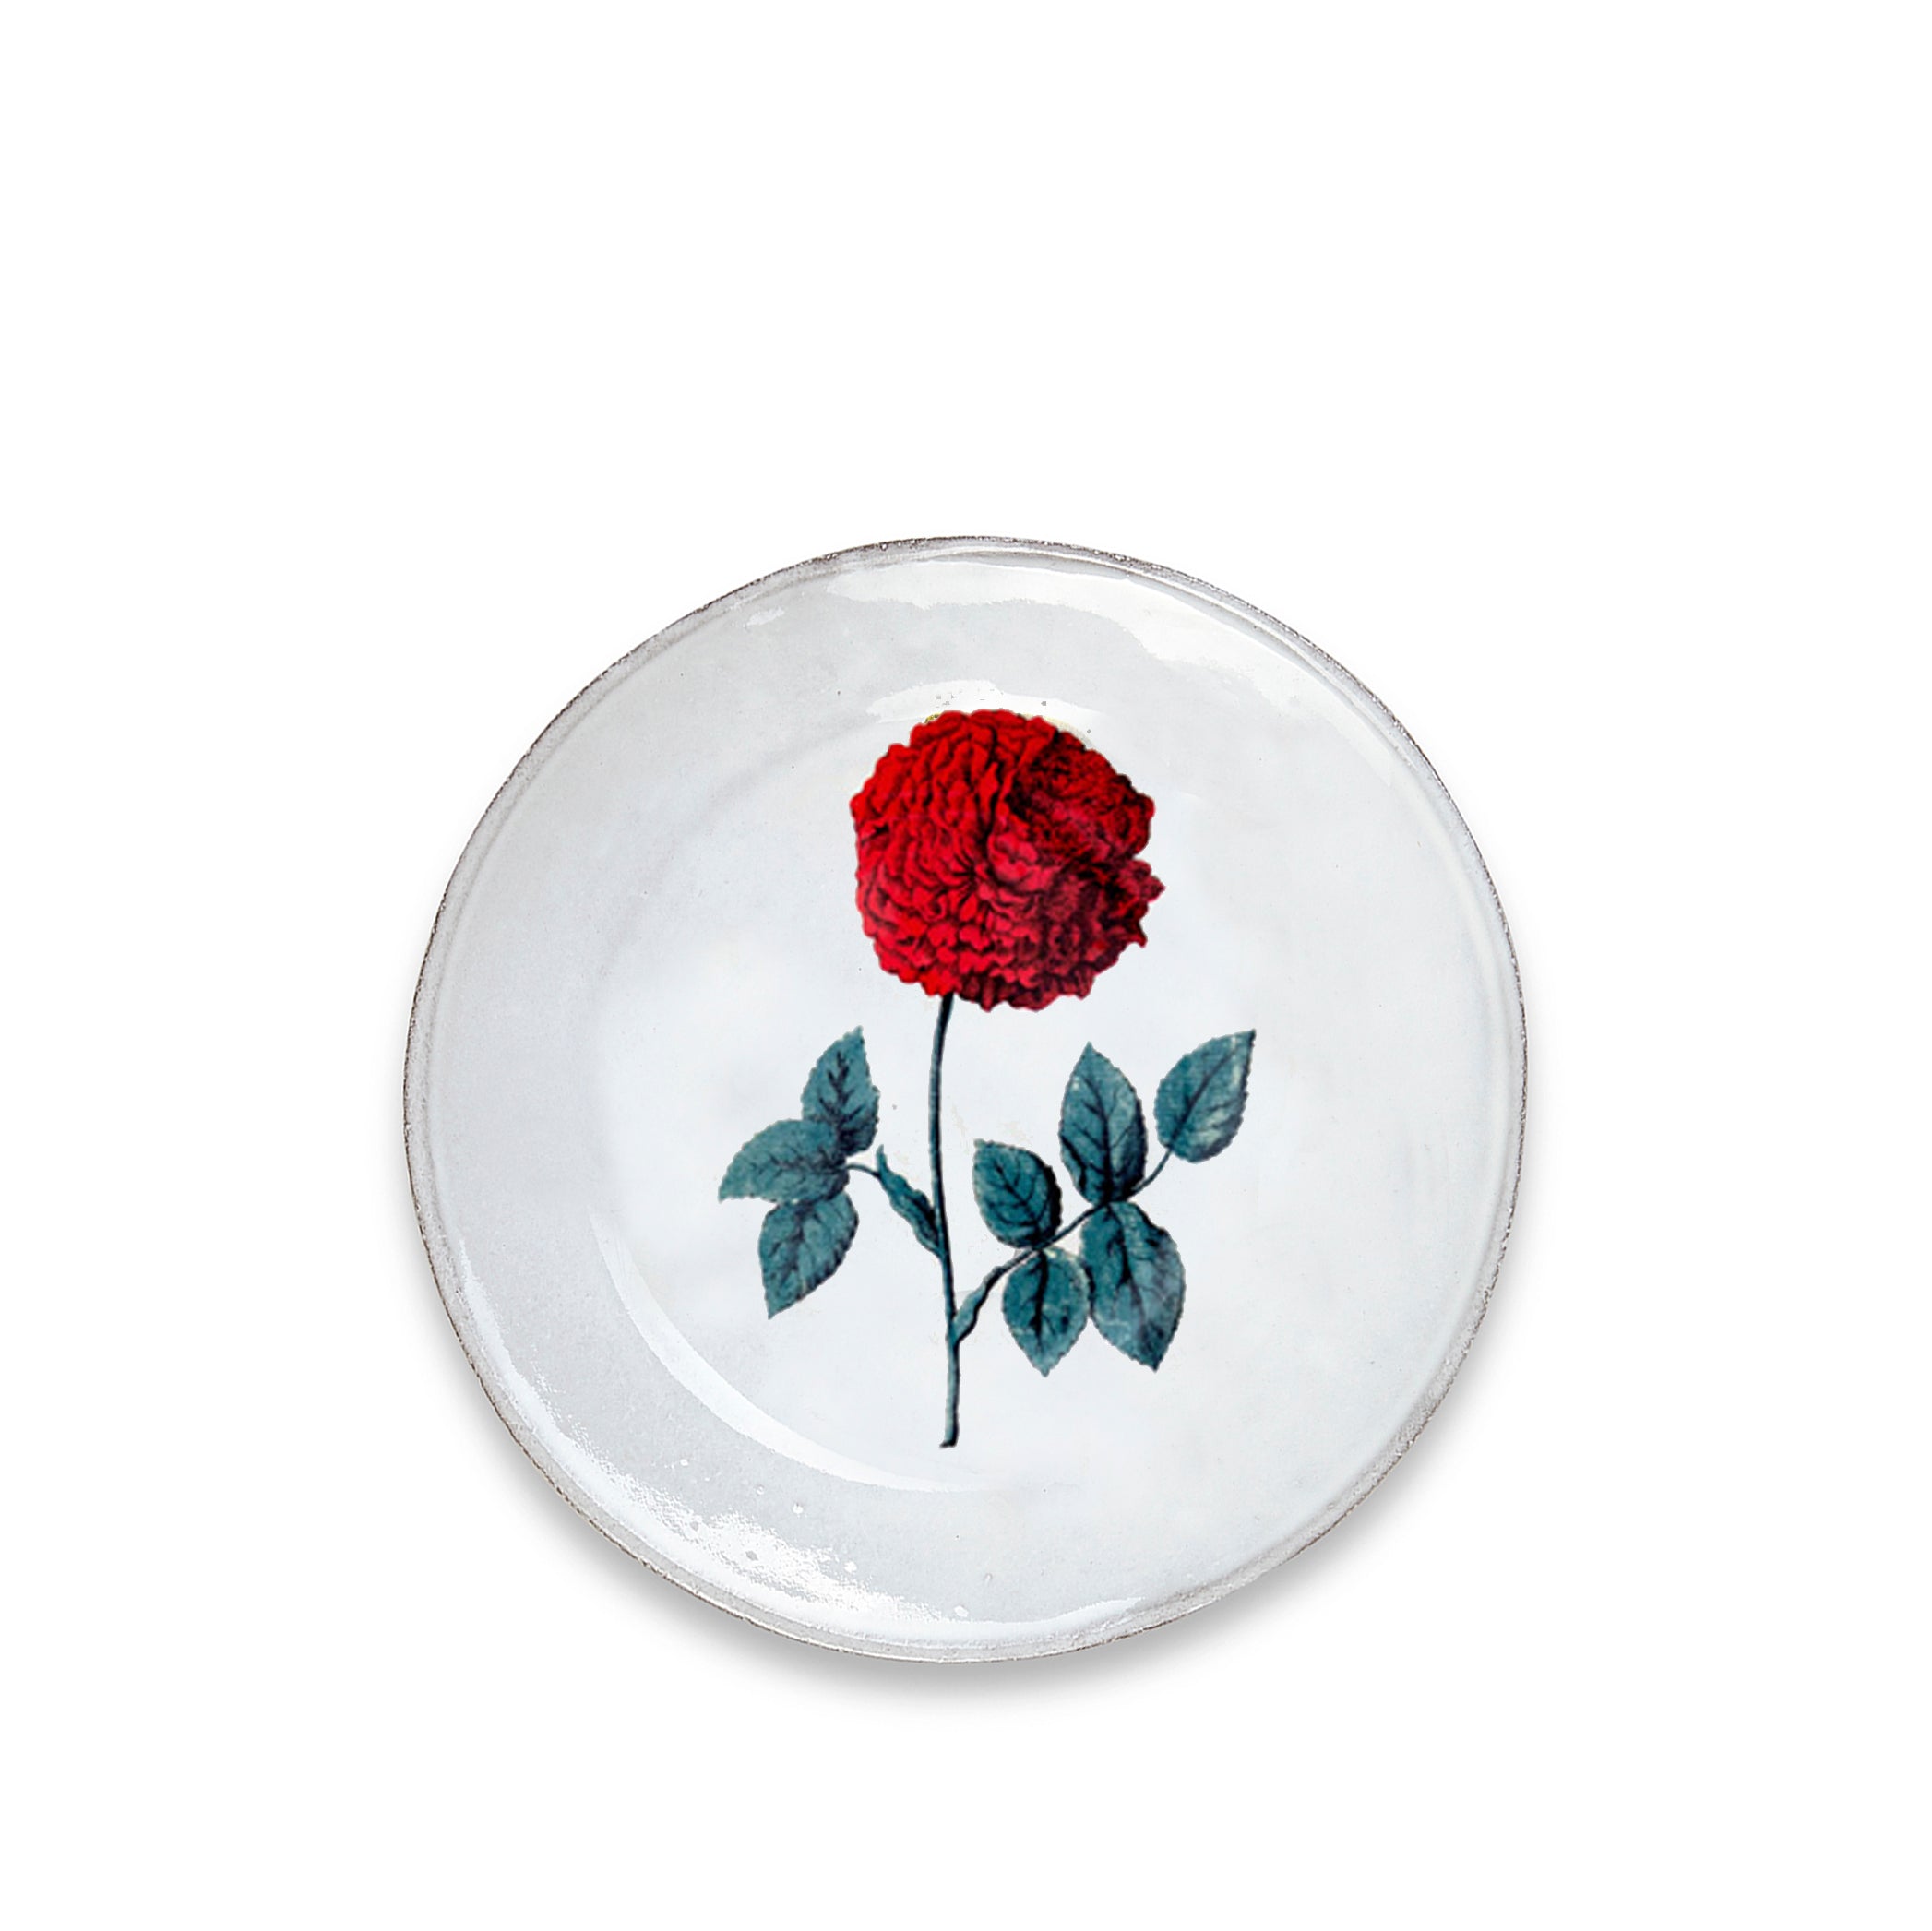 Dutch Hundred Leaved Rose Soup Plate by Astier de Villatte, 22cm